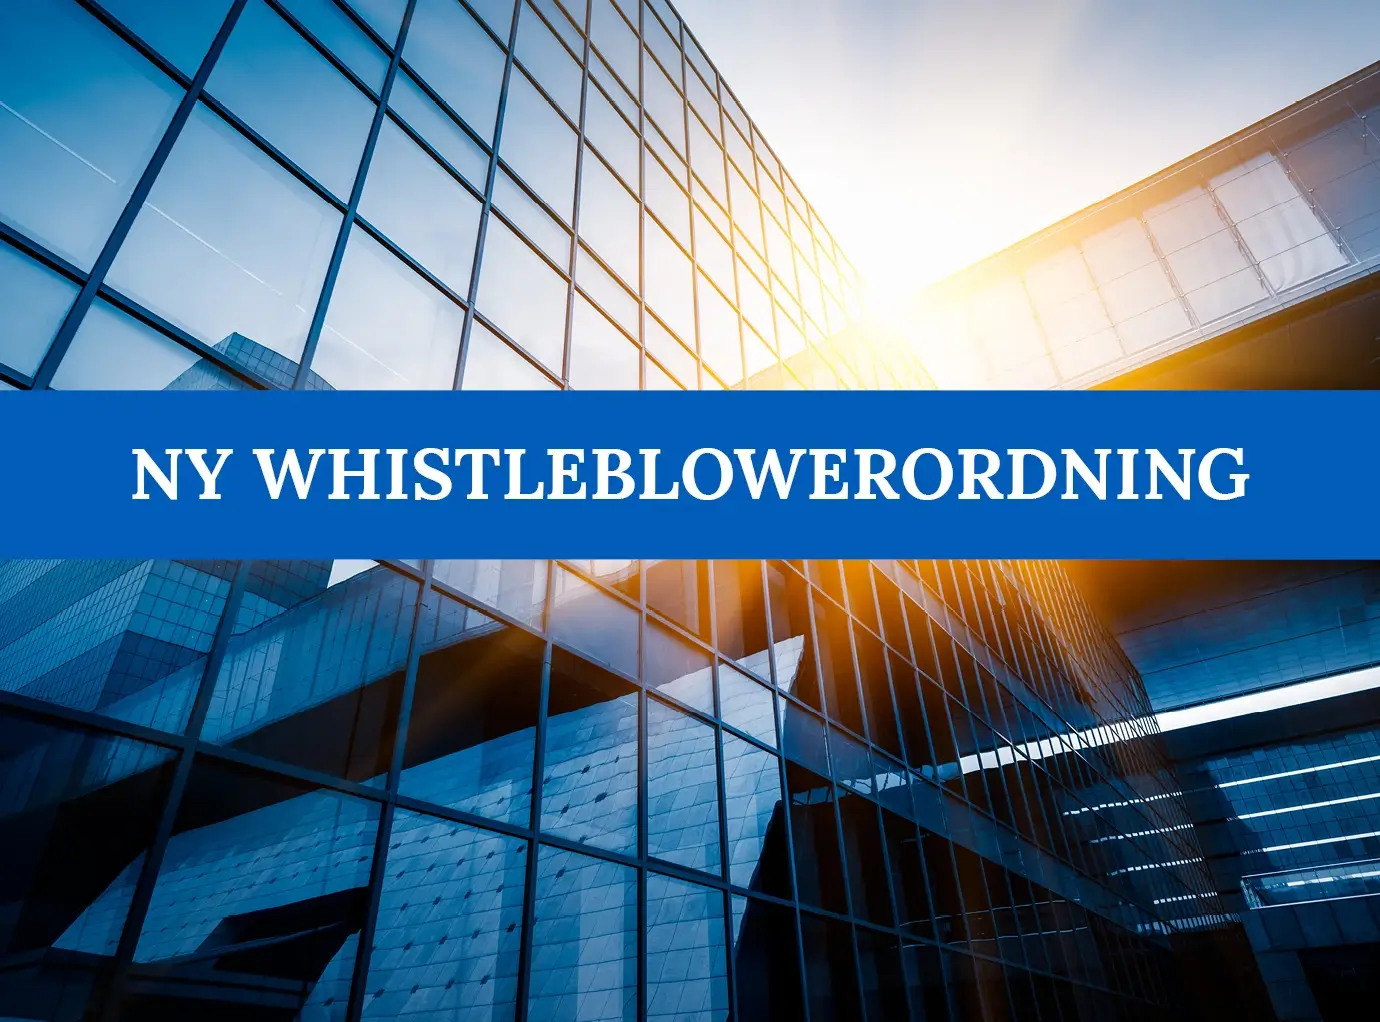 Ny whistleblowerordning